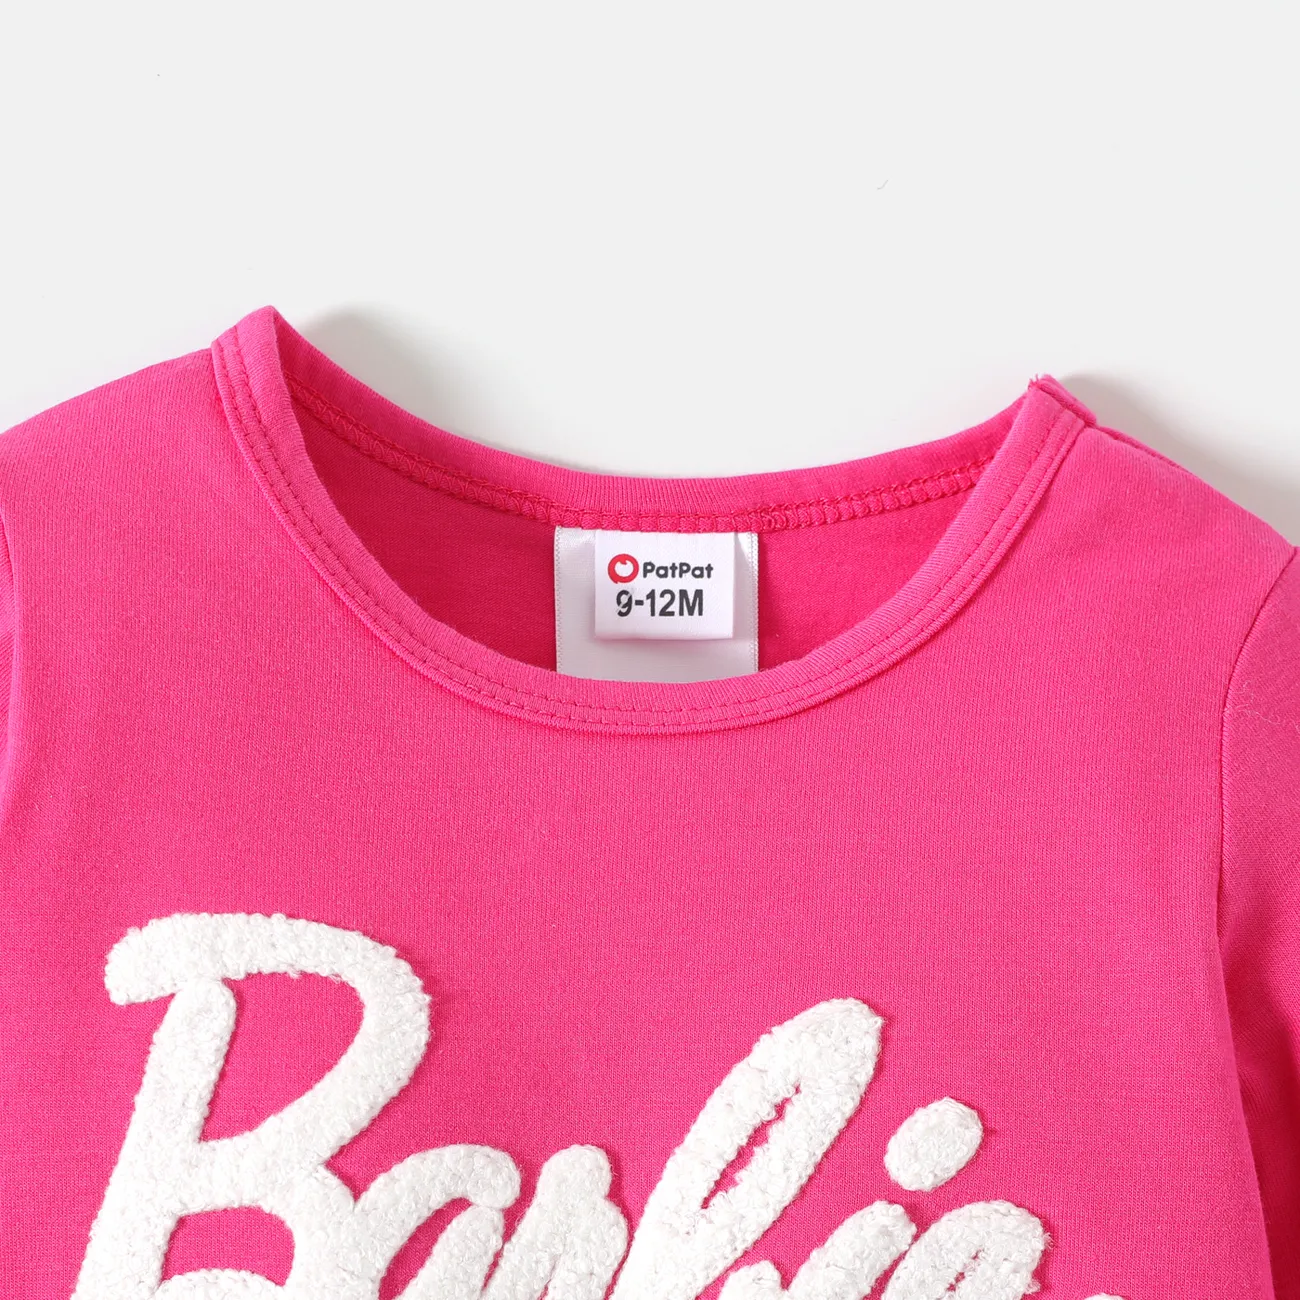 Barbie Baby Girl Letter Embroidered Long-sleeve Jumpsuit Hot Pink big image 1